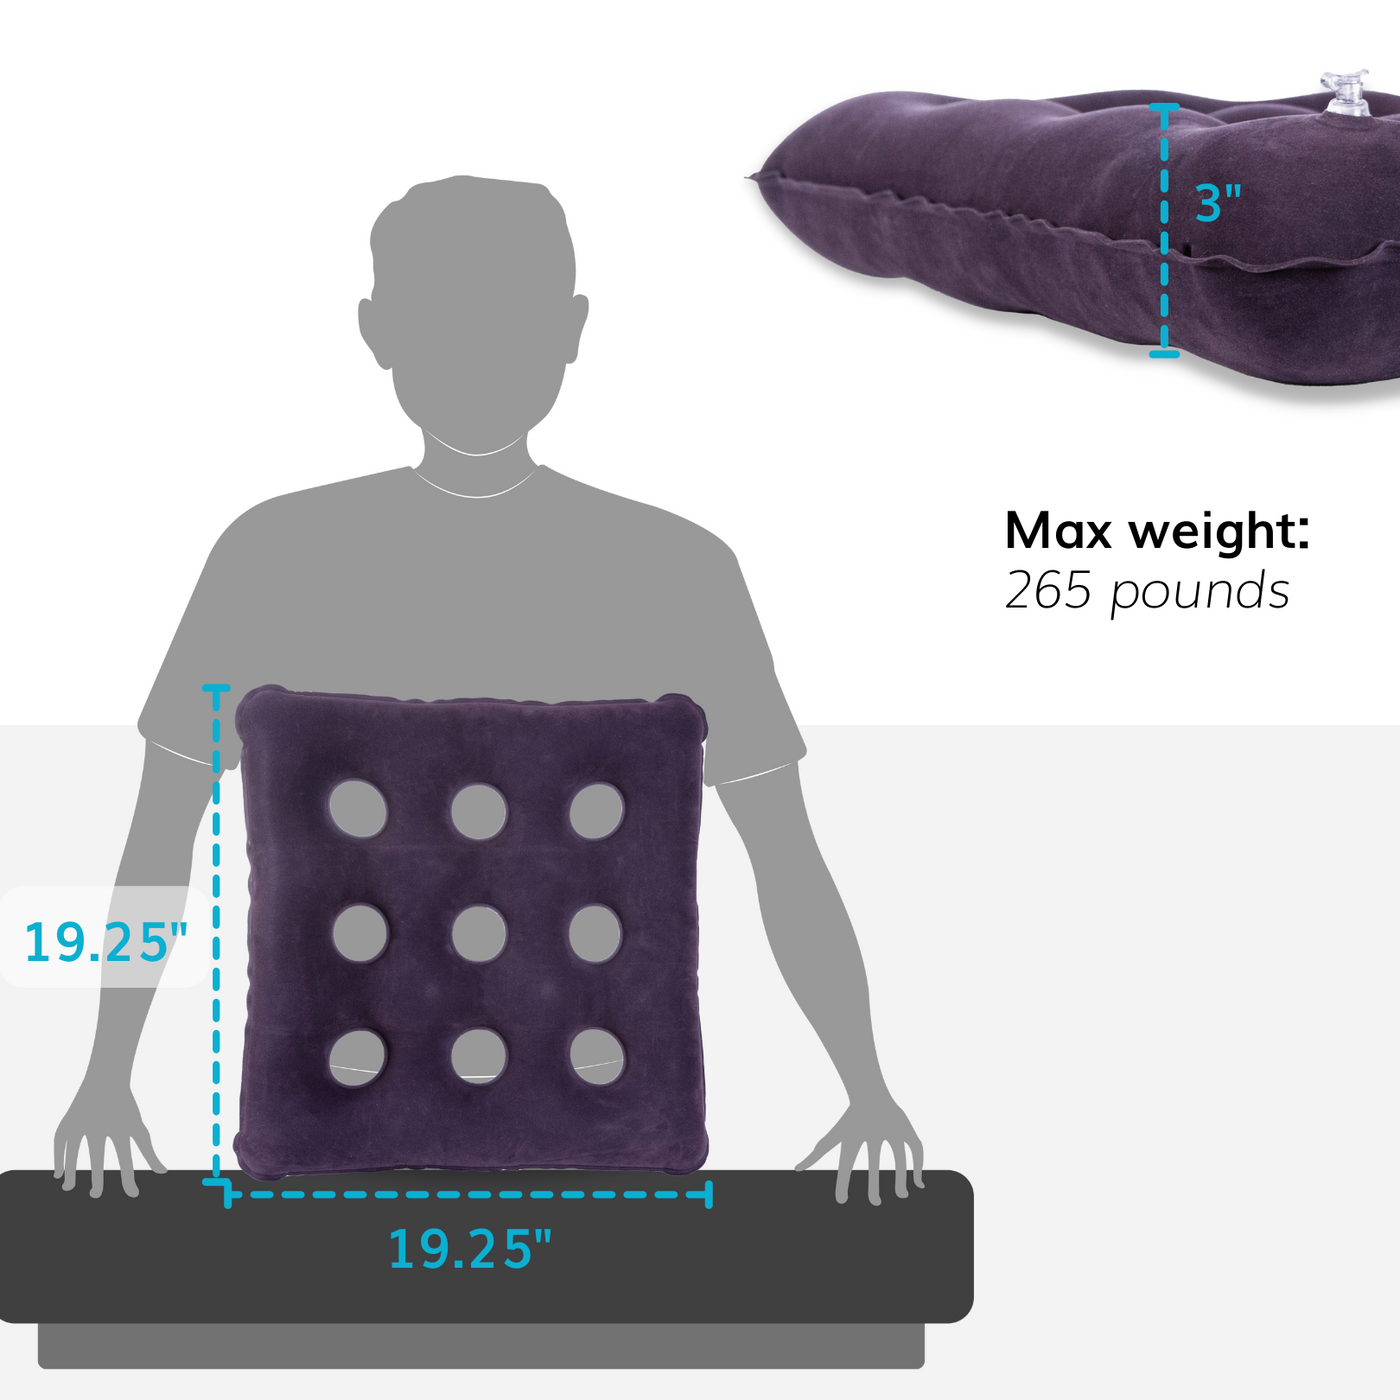 Trough, Folding Cushion for Tailbone Pain, Pelvic Pain, Genital Pain